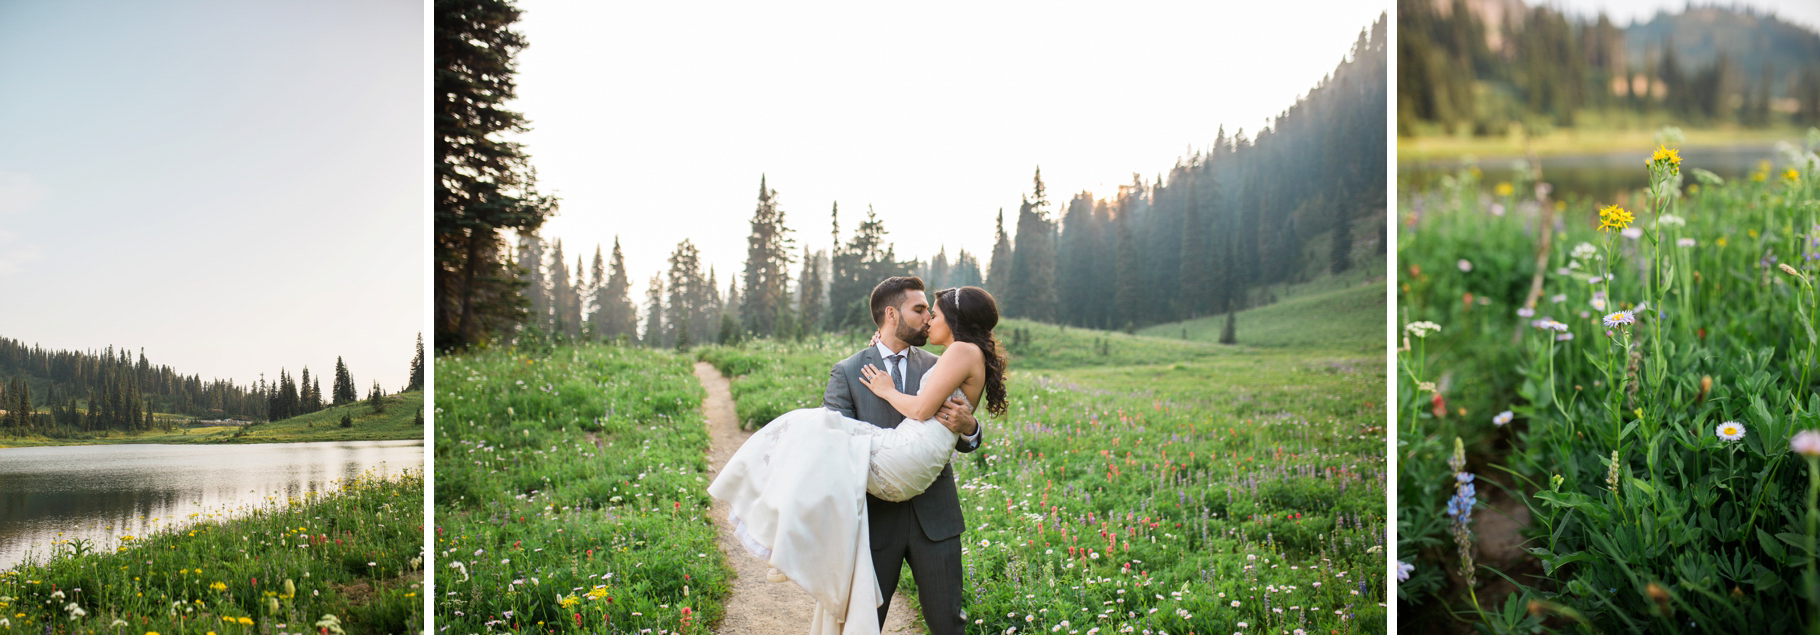 Tipsoo-Lake-Mt-Rainier-Wildflowers-Wedding-Photographer-Seattle-Photography-37